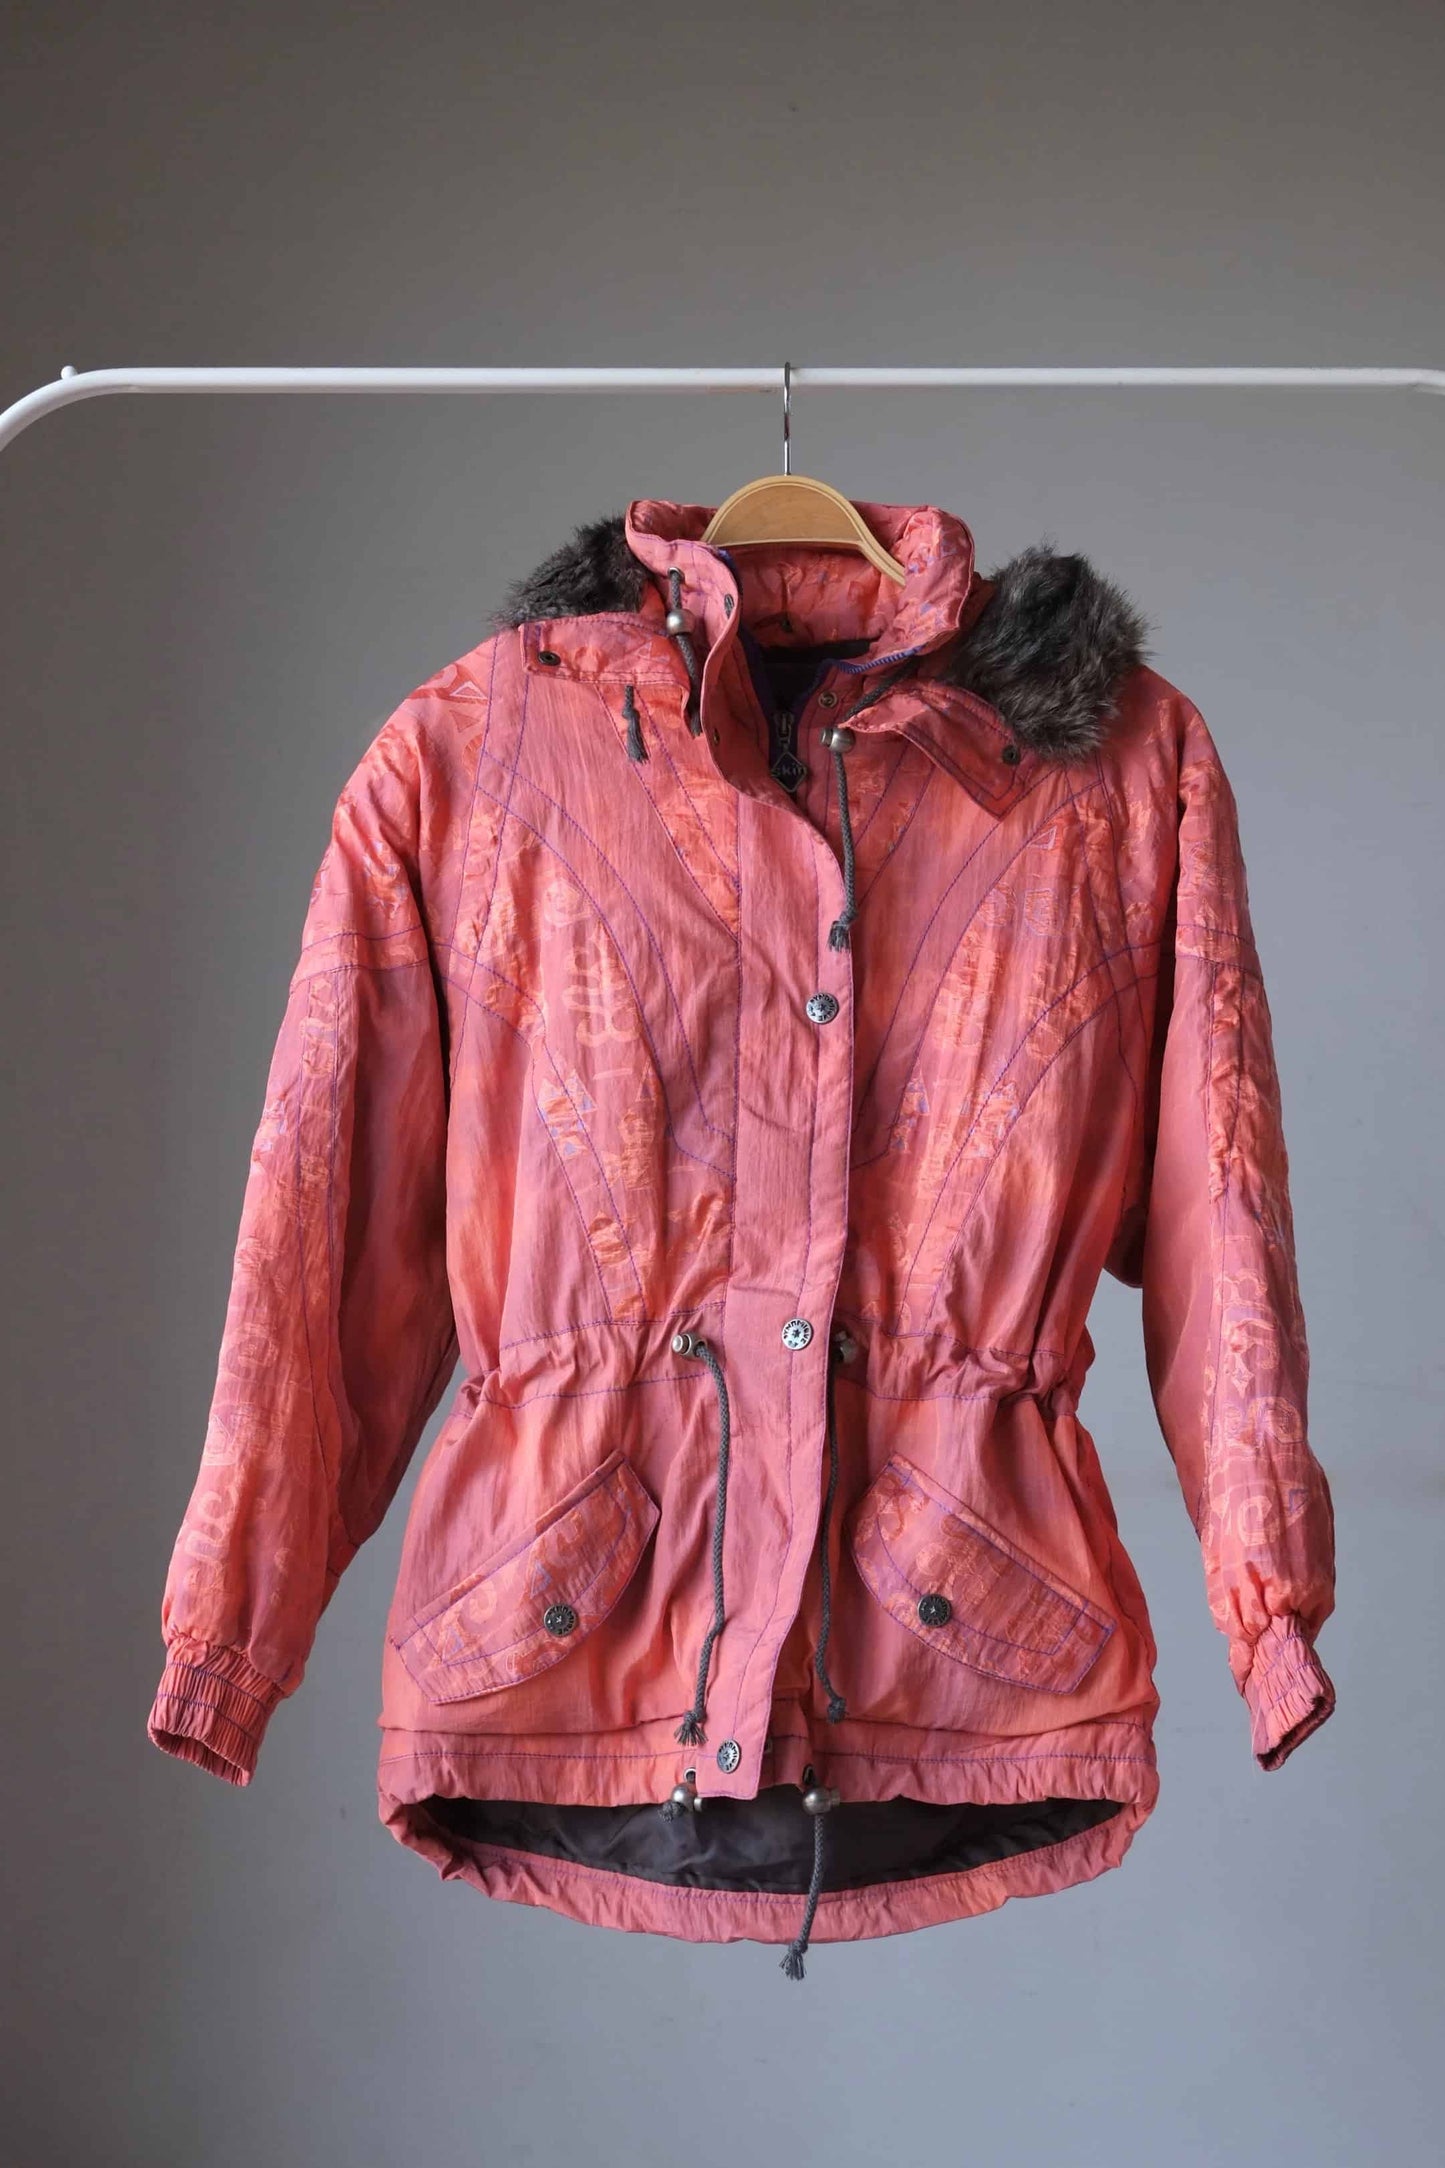 Vintage 90's Women's Ski Jacket in coral with fur lined hoodie on hanger